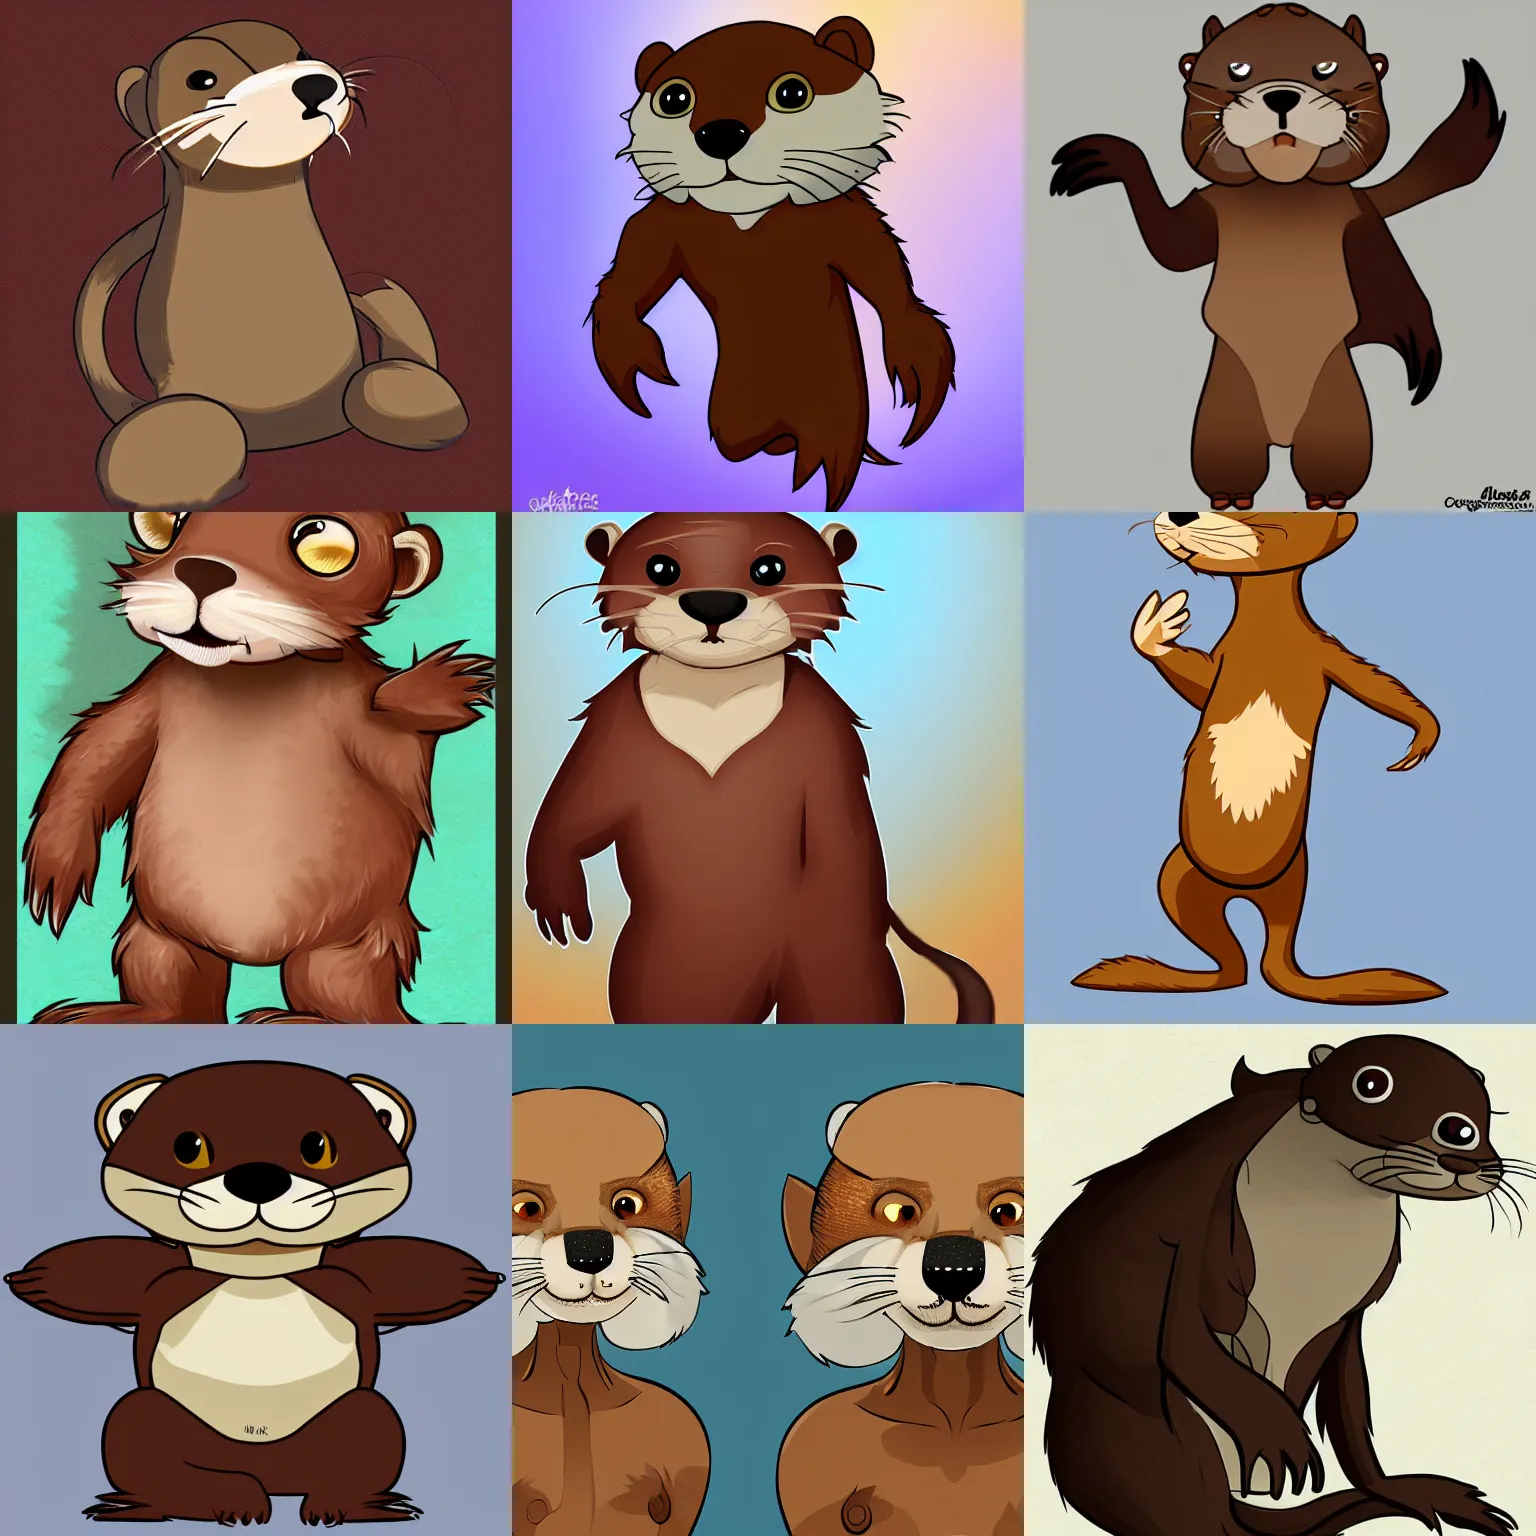 Prompt: anthropomorphic furry otter, cartoony, artstation, furraffinity, storybook art style